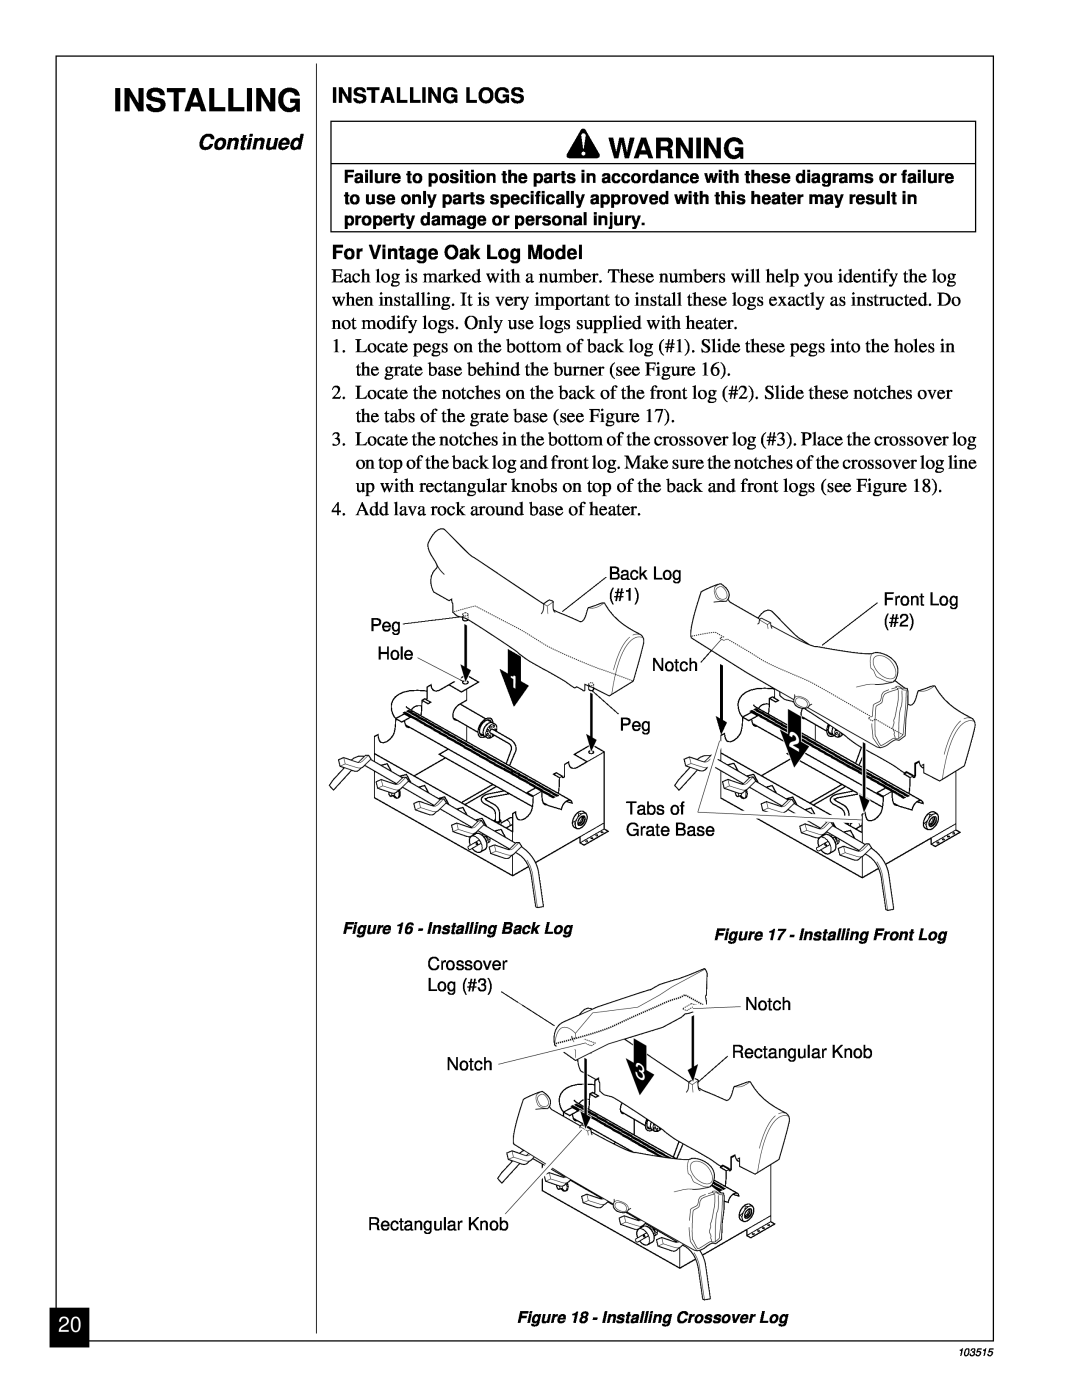 Vanguard Heating Gas Log Heater installation manual Installing Logs, Continued, For Vintage Oak Log Model 